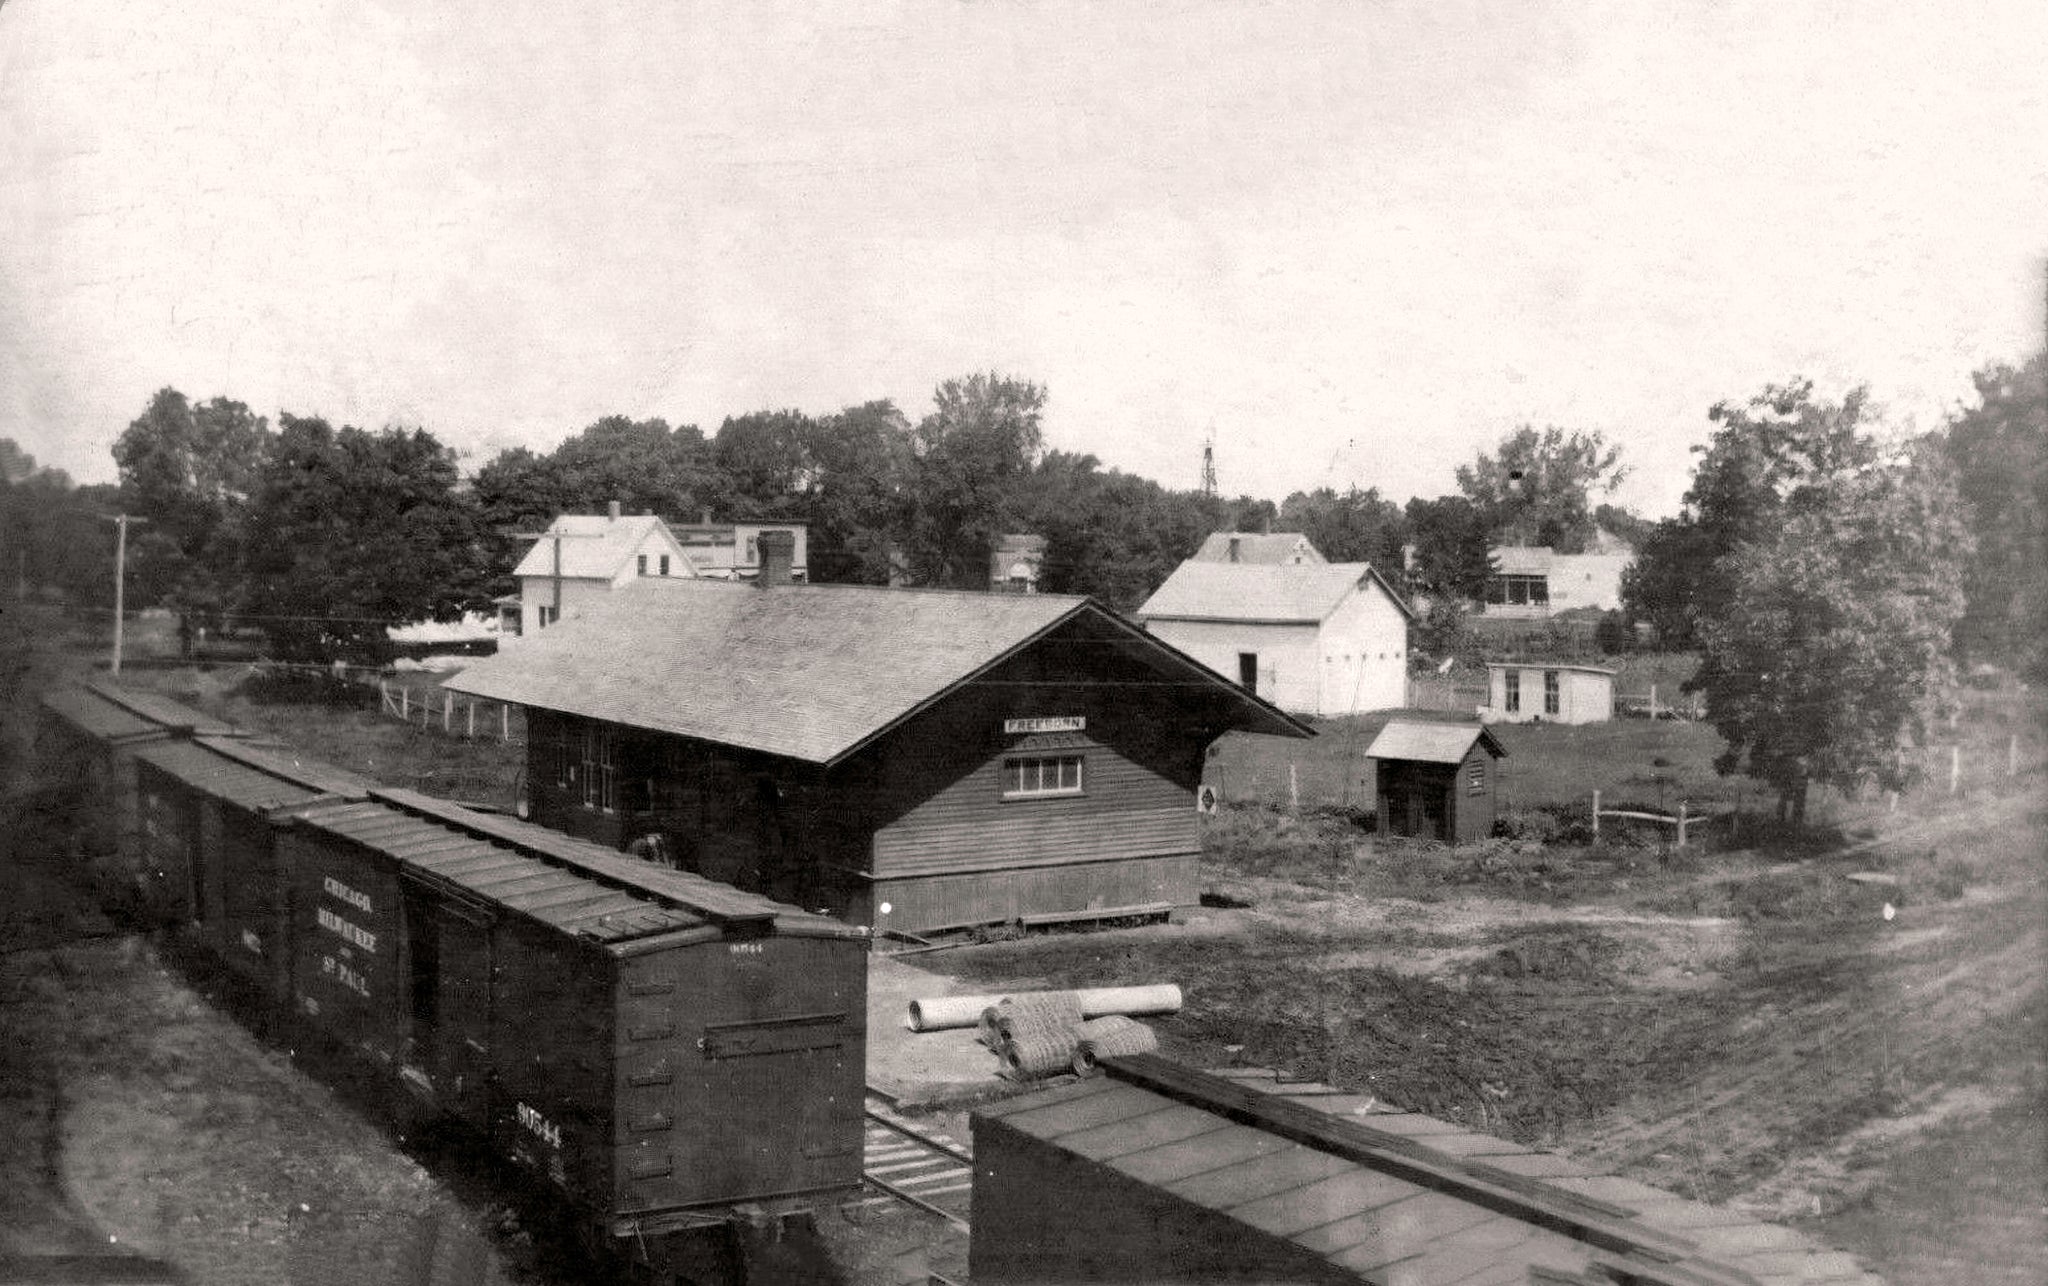 Chicago, Milwaukee & St Paul Railroad Depot, Freeborn, Minnesota, 1910s Postcard Reproduction